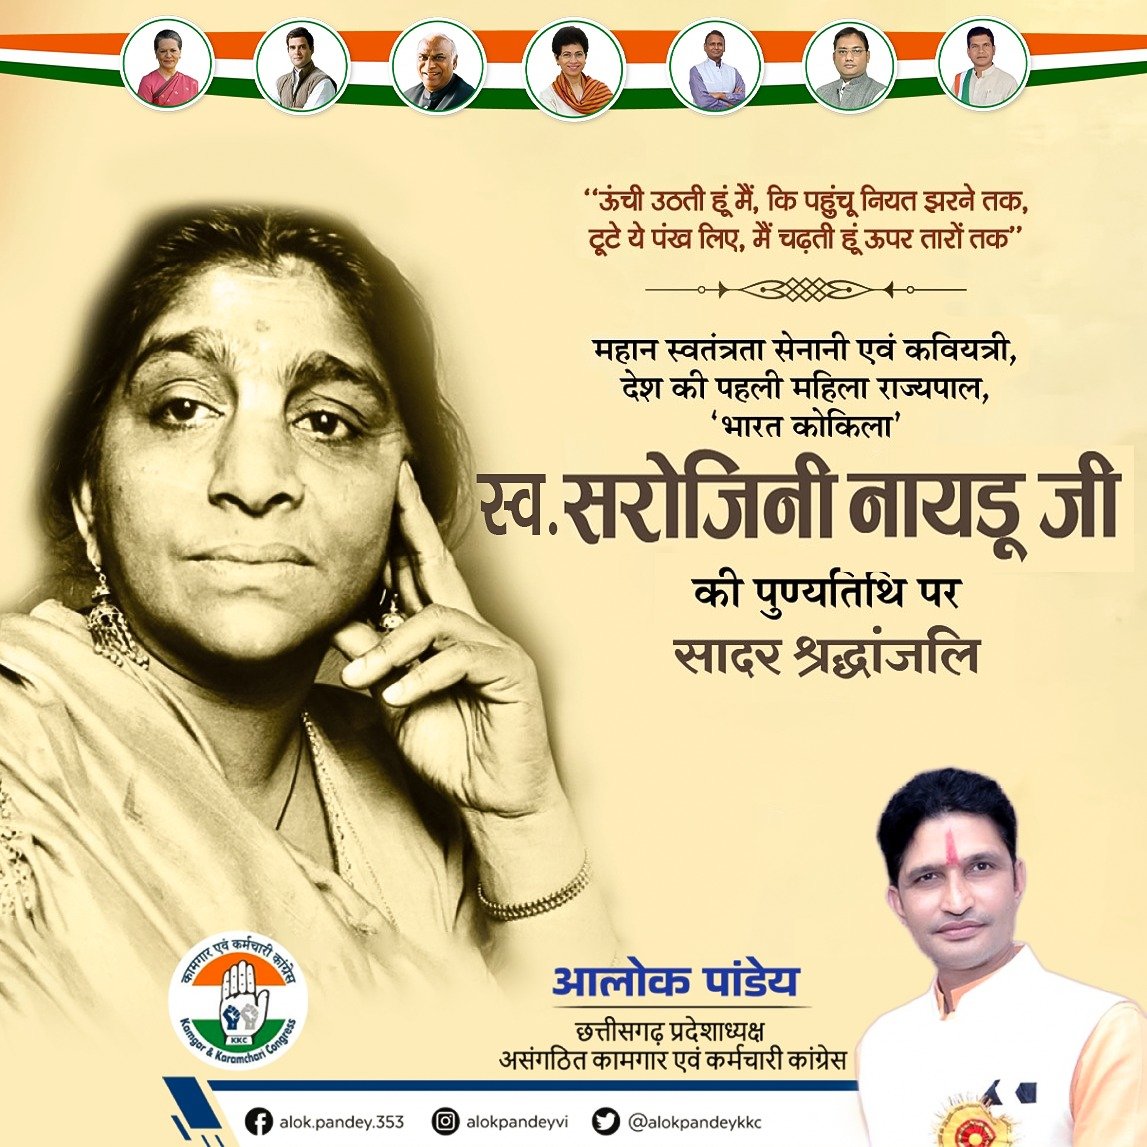 देश की प्रथम महिला राज्यपाल और सुप्रसिद्ध कवयित्री ‘भारत कोकिला’ स्व. सरोजिनी नायडू जी की पुण्यतिथि पर सादर नमन।
#BharatKokila #Sarojininaidu